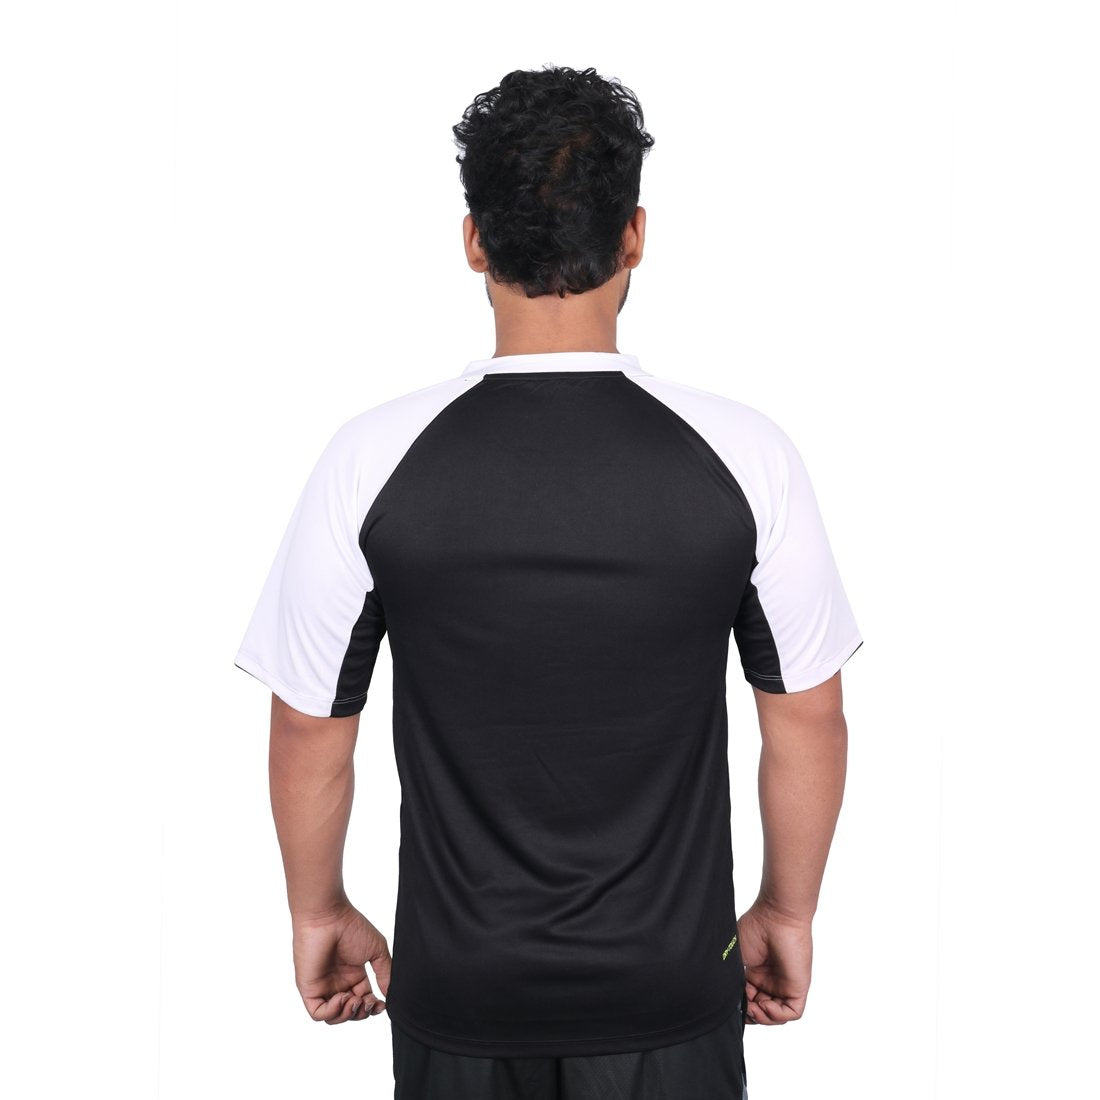 Vector X VRS-004 Polyester Half Sleeves T-Shirt, Men's (Black/White) - Best Price online Prokicksports.com